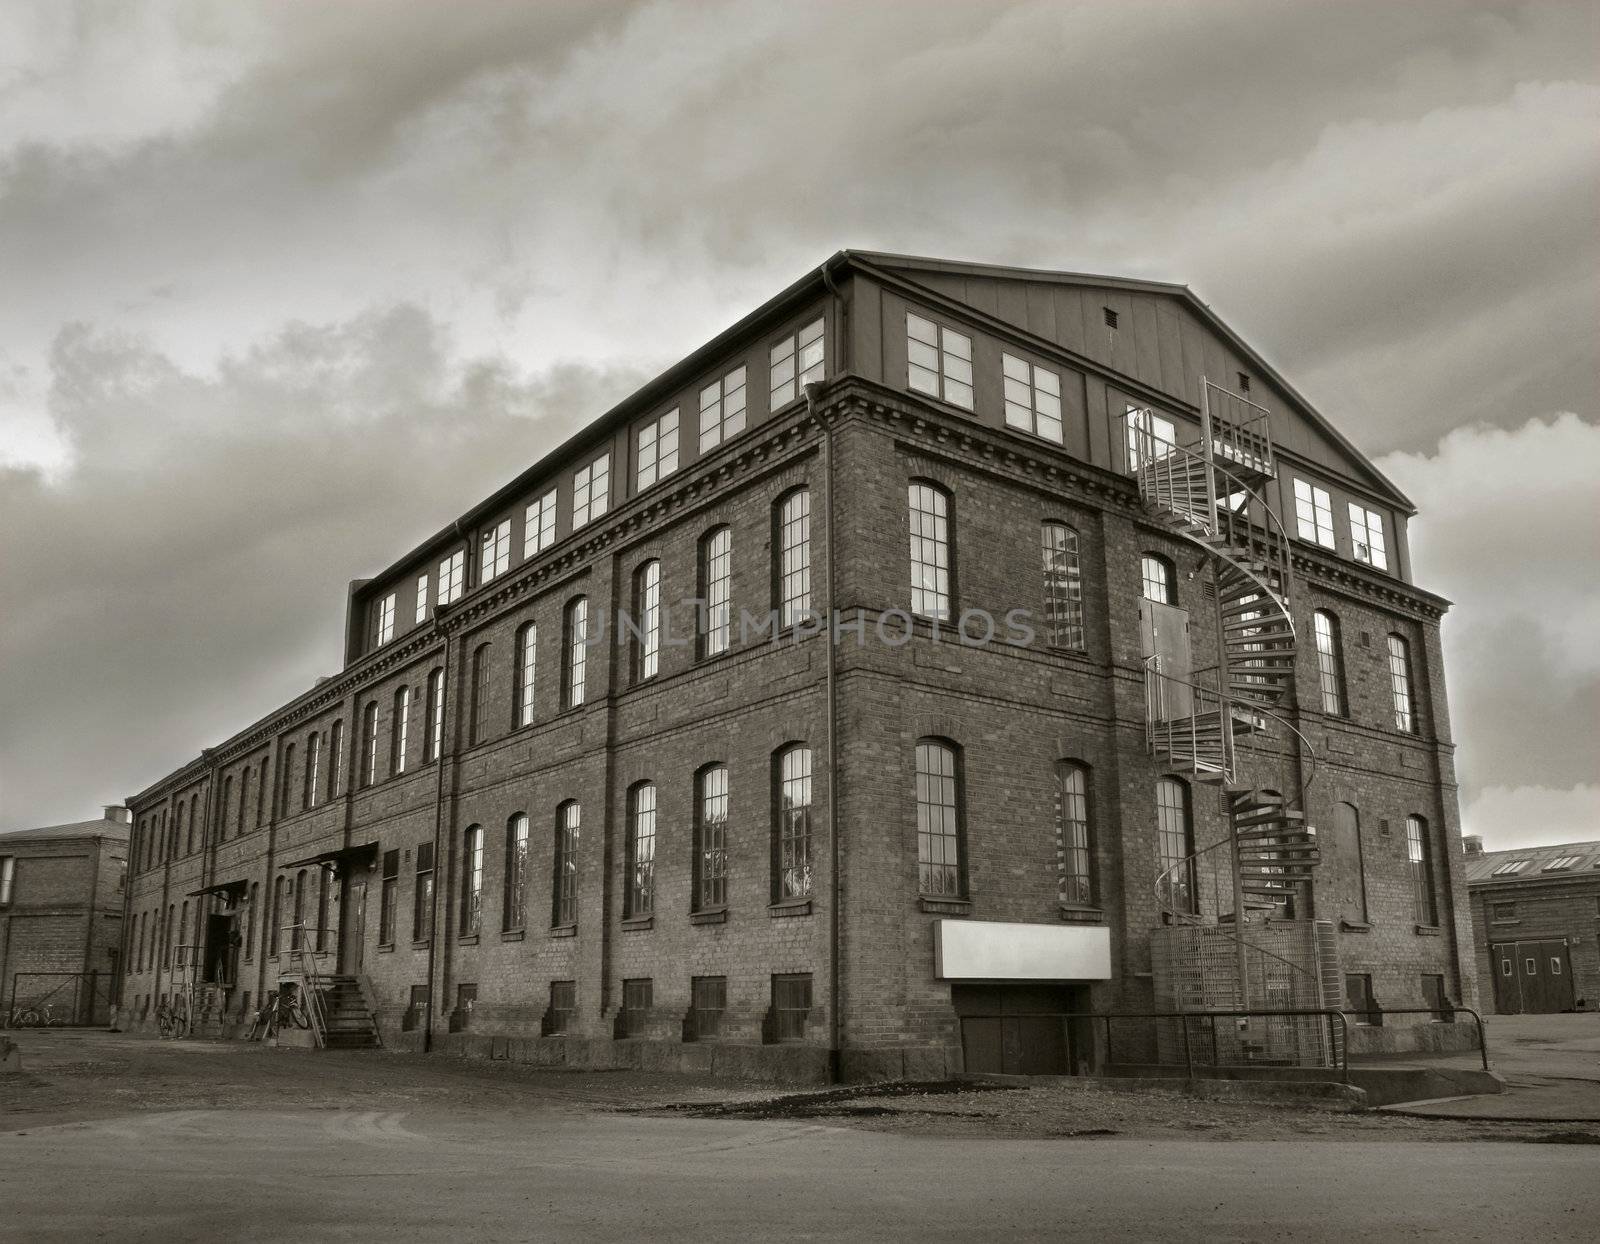 Old depressing factory building in sepia tone. Symbol for economic depressions.